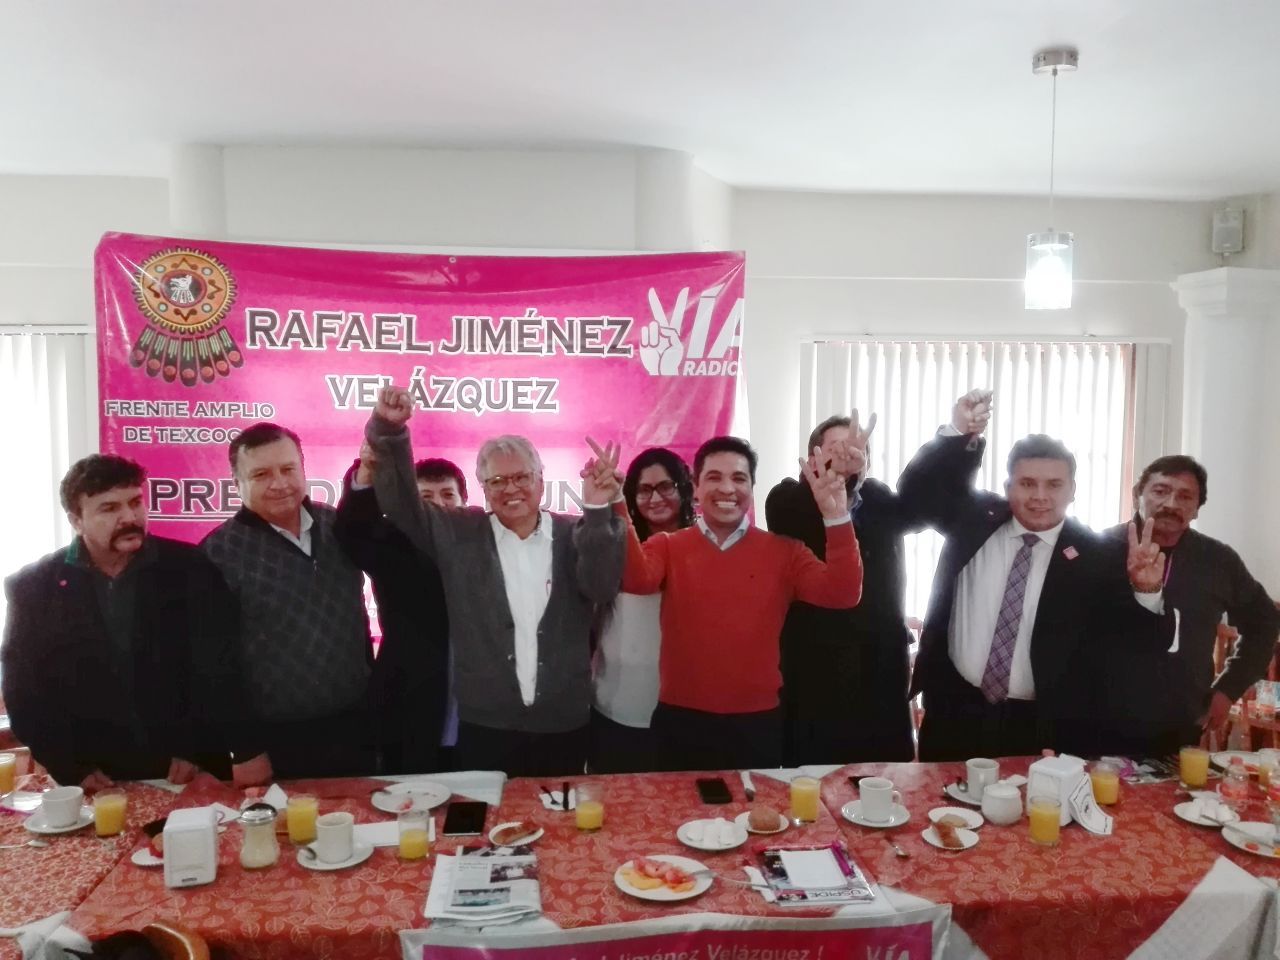 Presenta Vía Radical precandidato para alcaldía de Texcoco; Rafael Jiménez va contra "cacicazgo